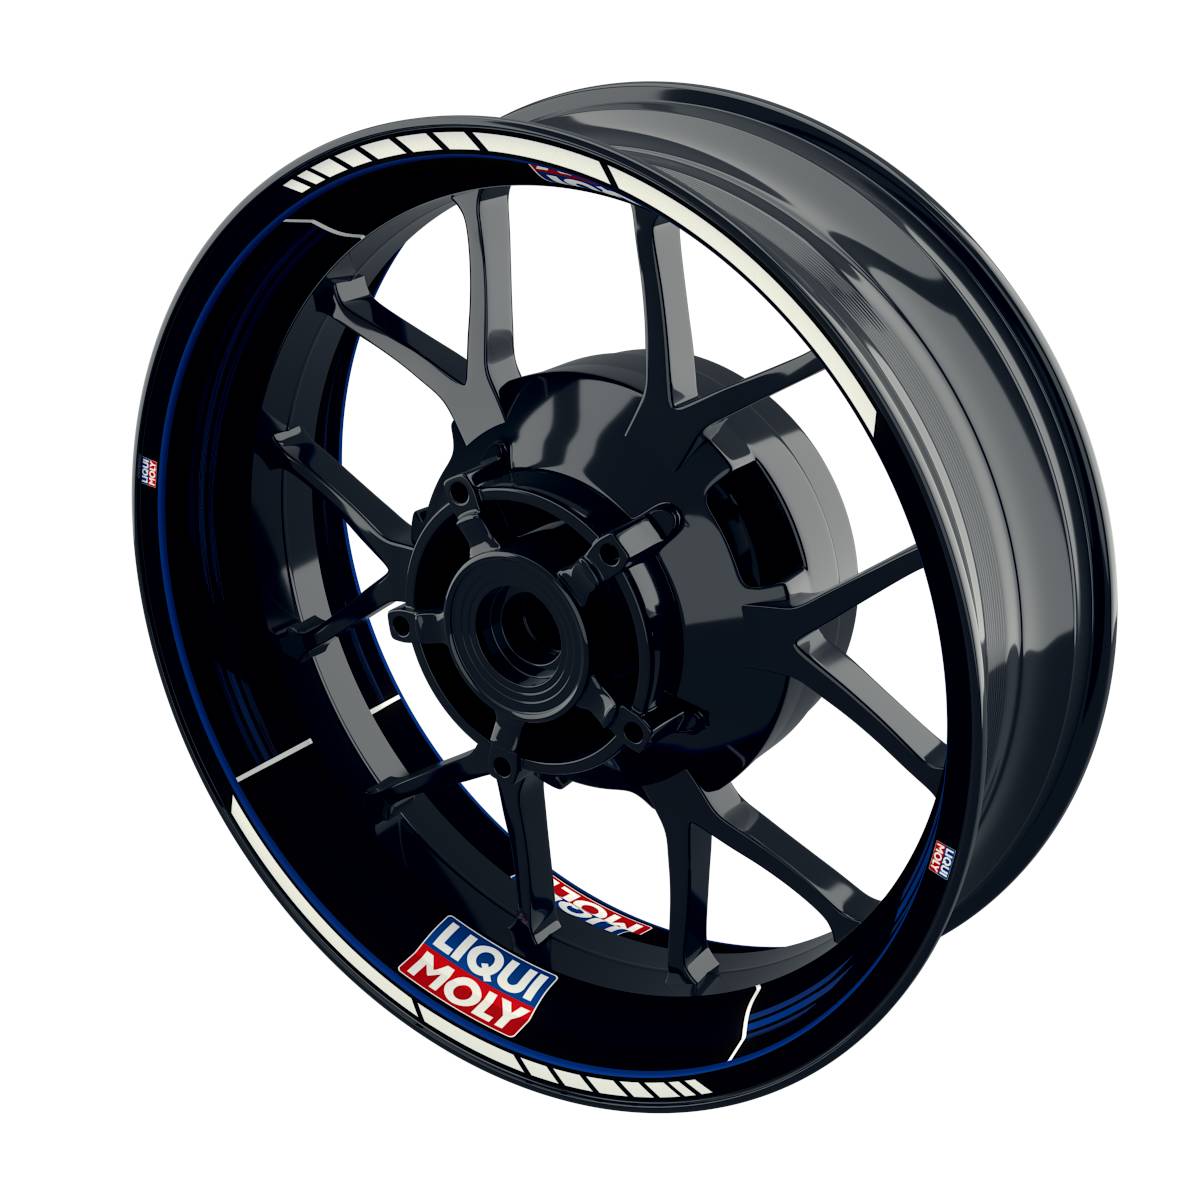 Liqui Moly Rim Decals Motiv Scratched black Wheelsticker Premium